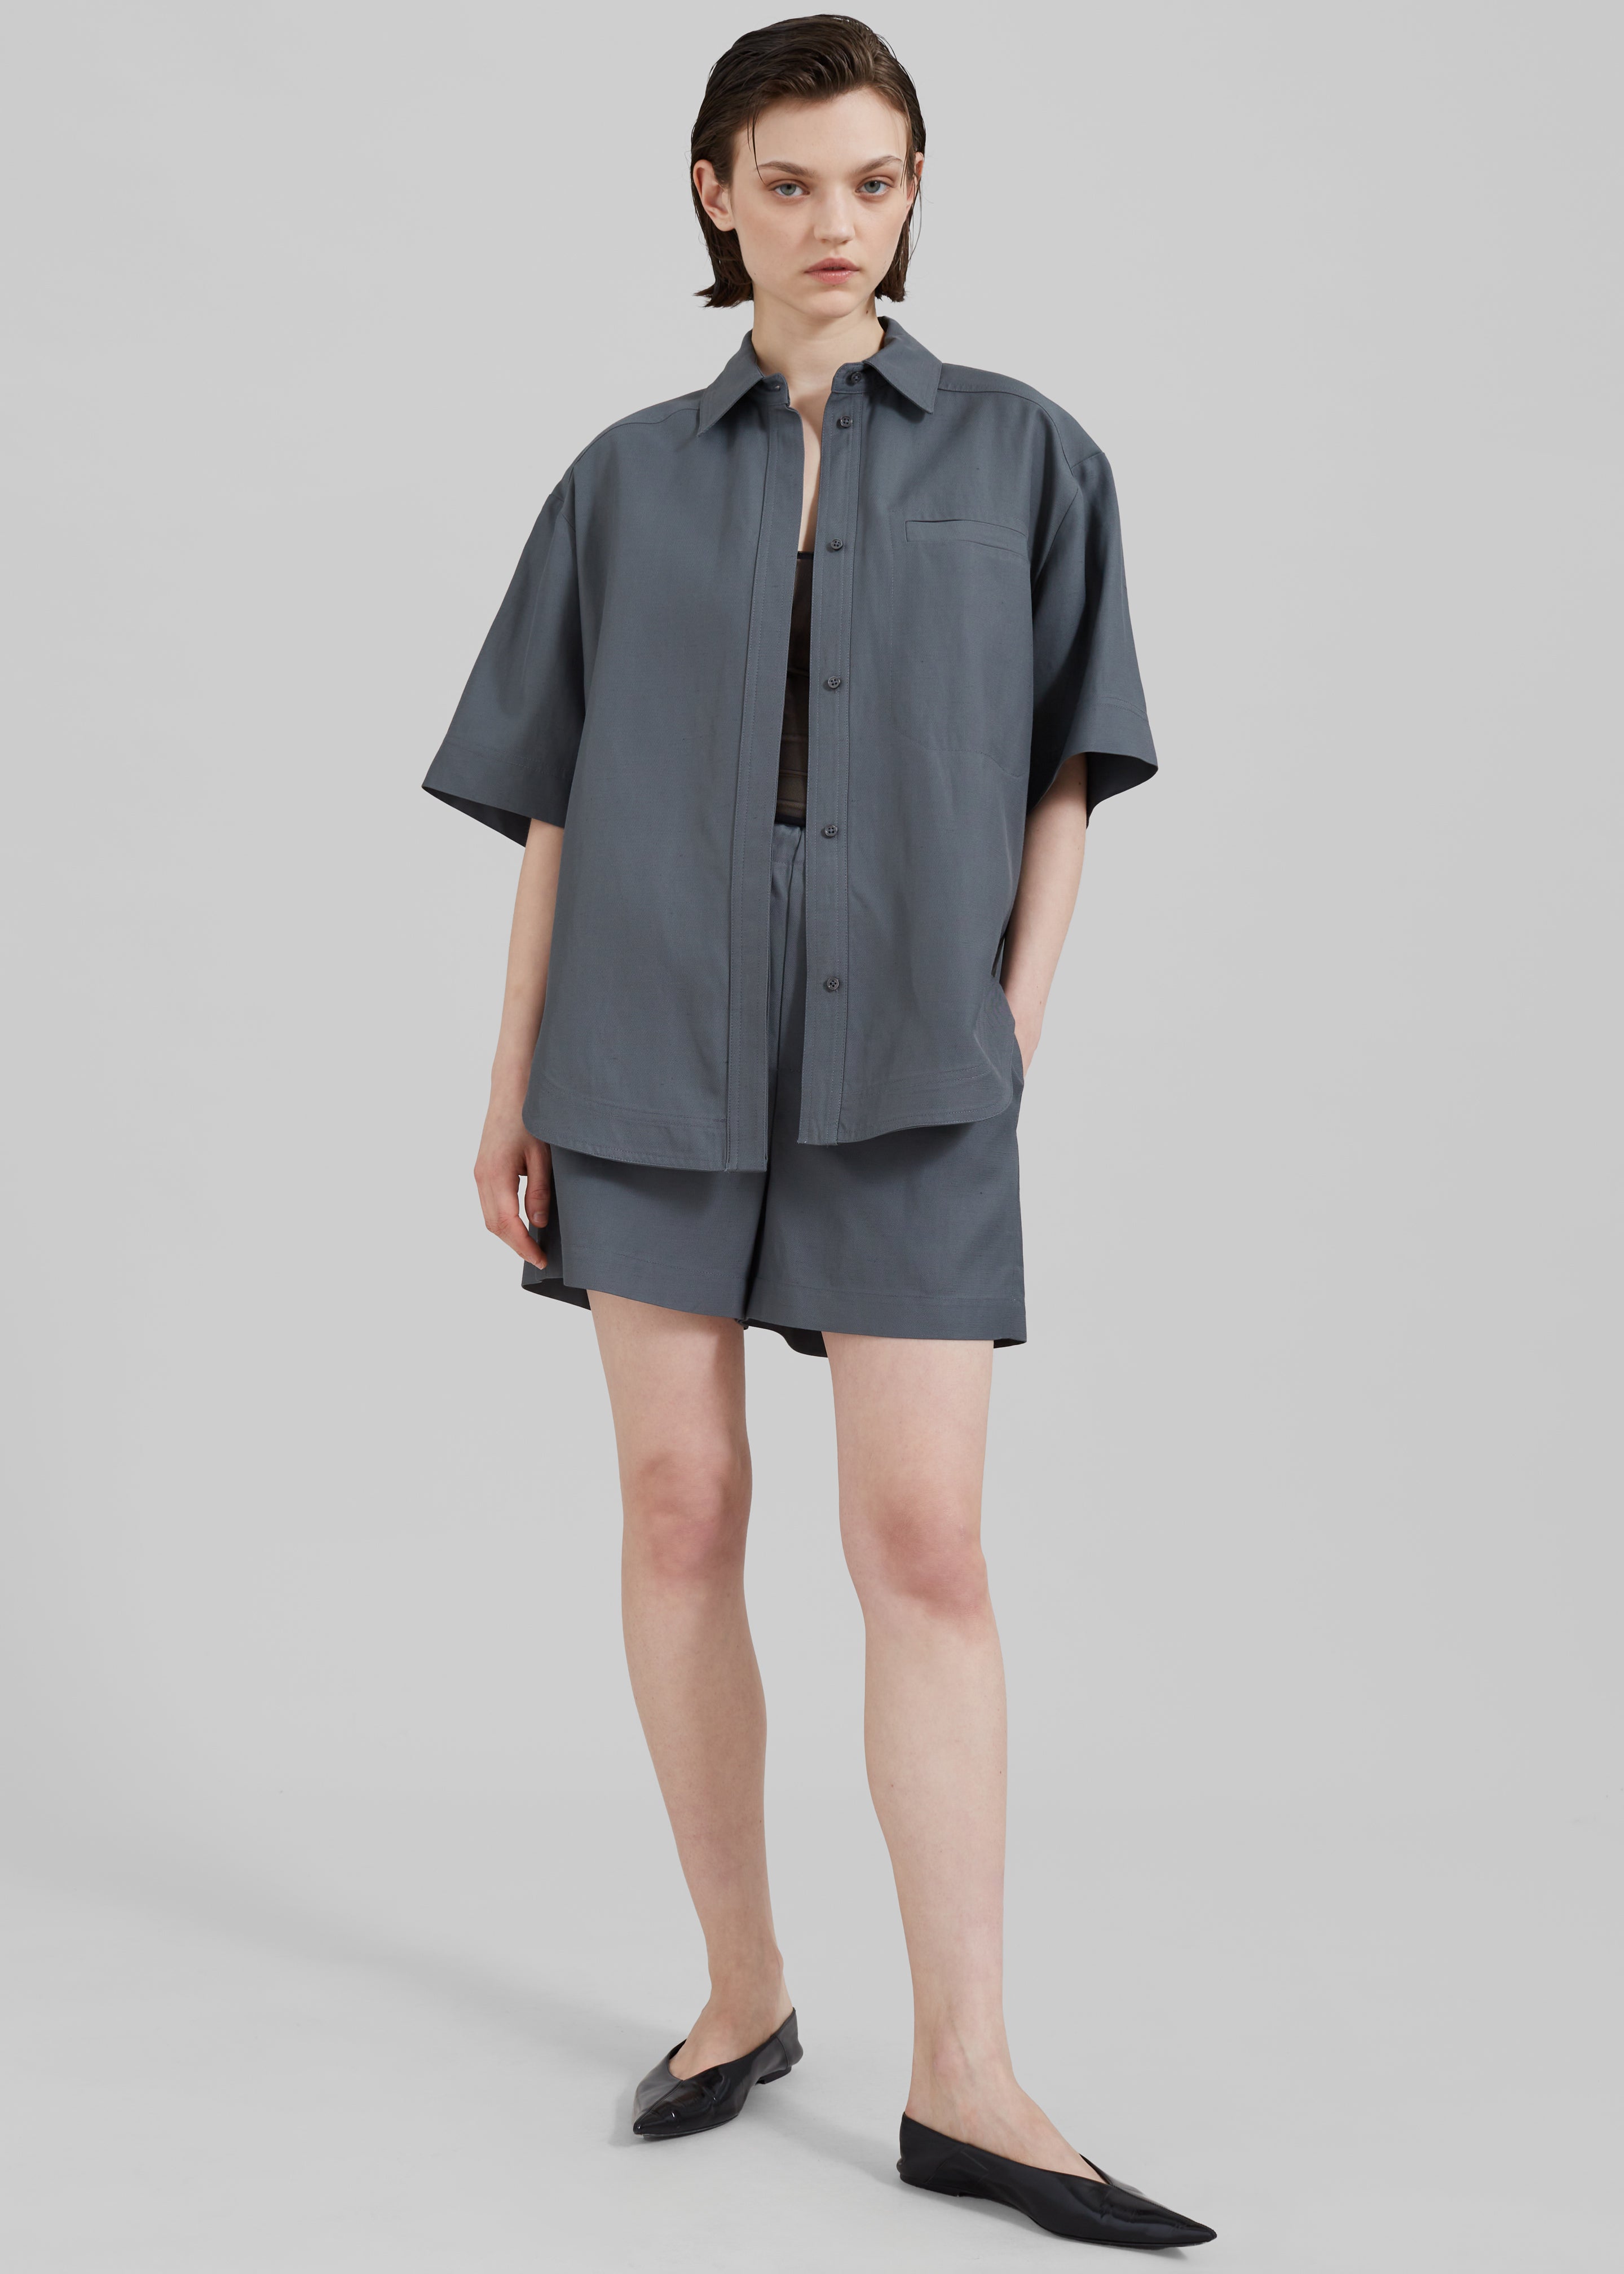 Loulou Studio Moheli Short Sleeve Shirt - Fjord Grey - 4